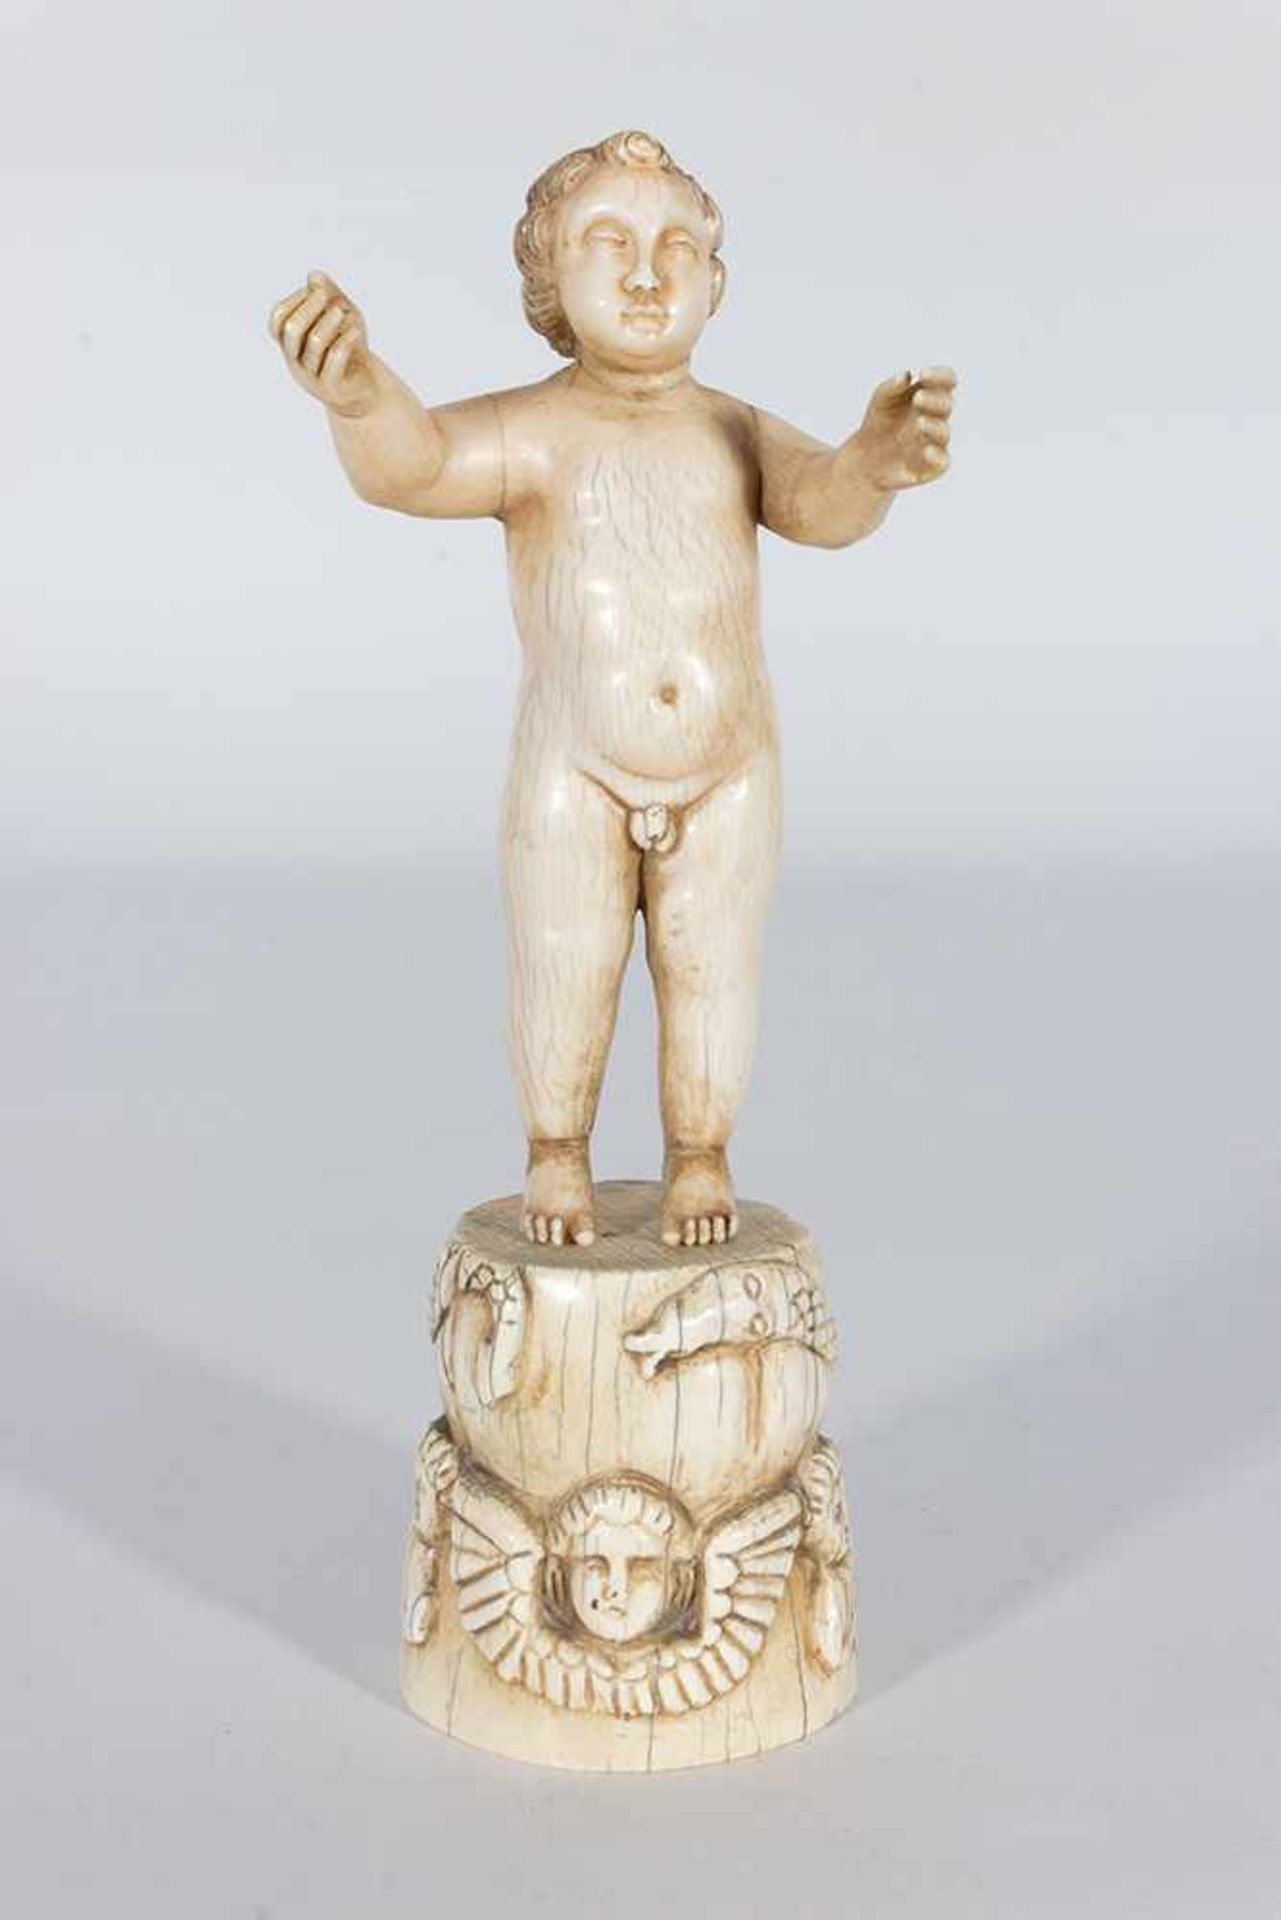 Escuela indo-portuguesa del siglo XVIII. "Niño". Escultura en marfil tallado. Se adjunta documento